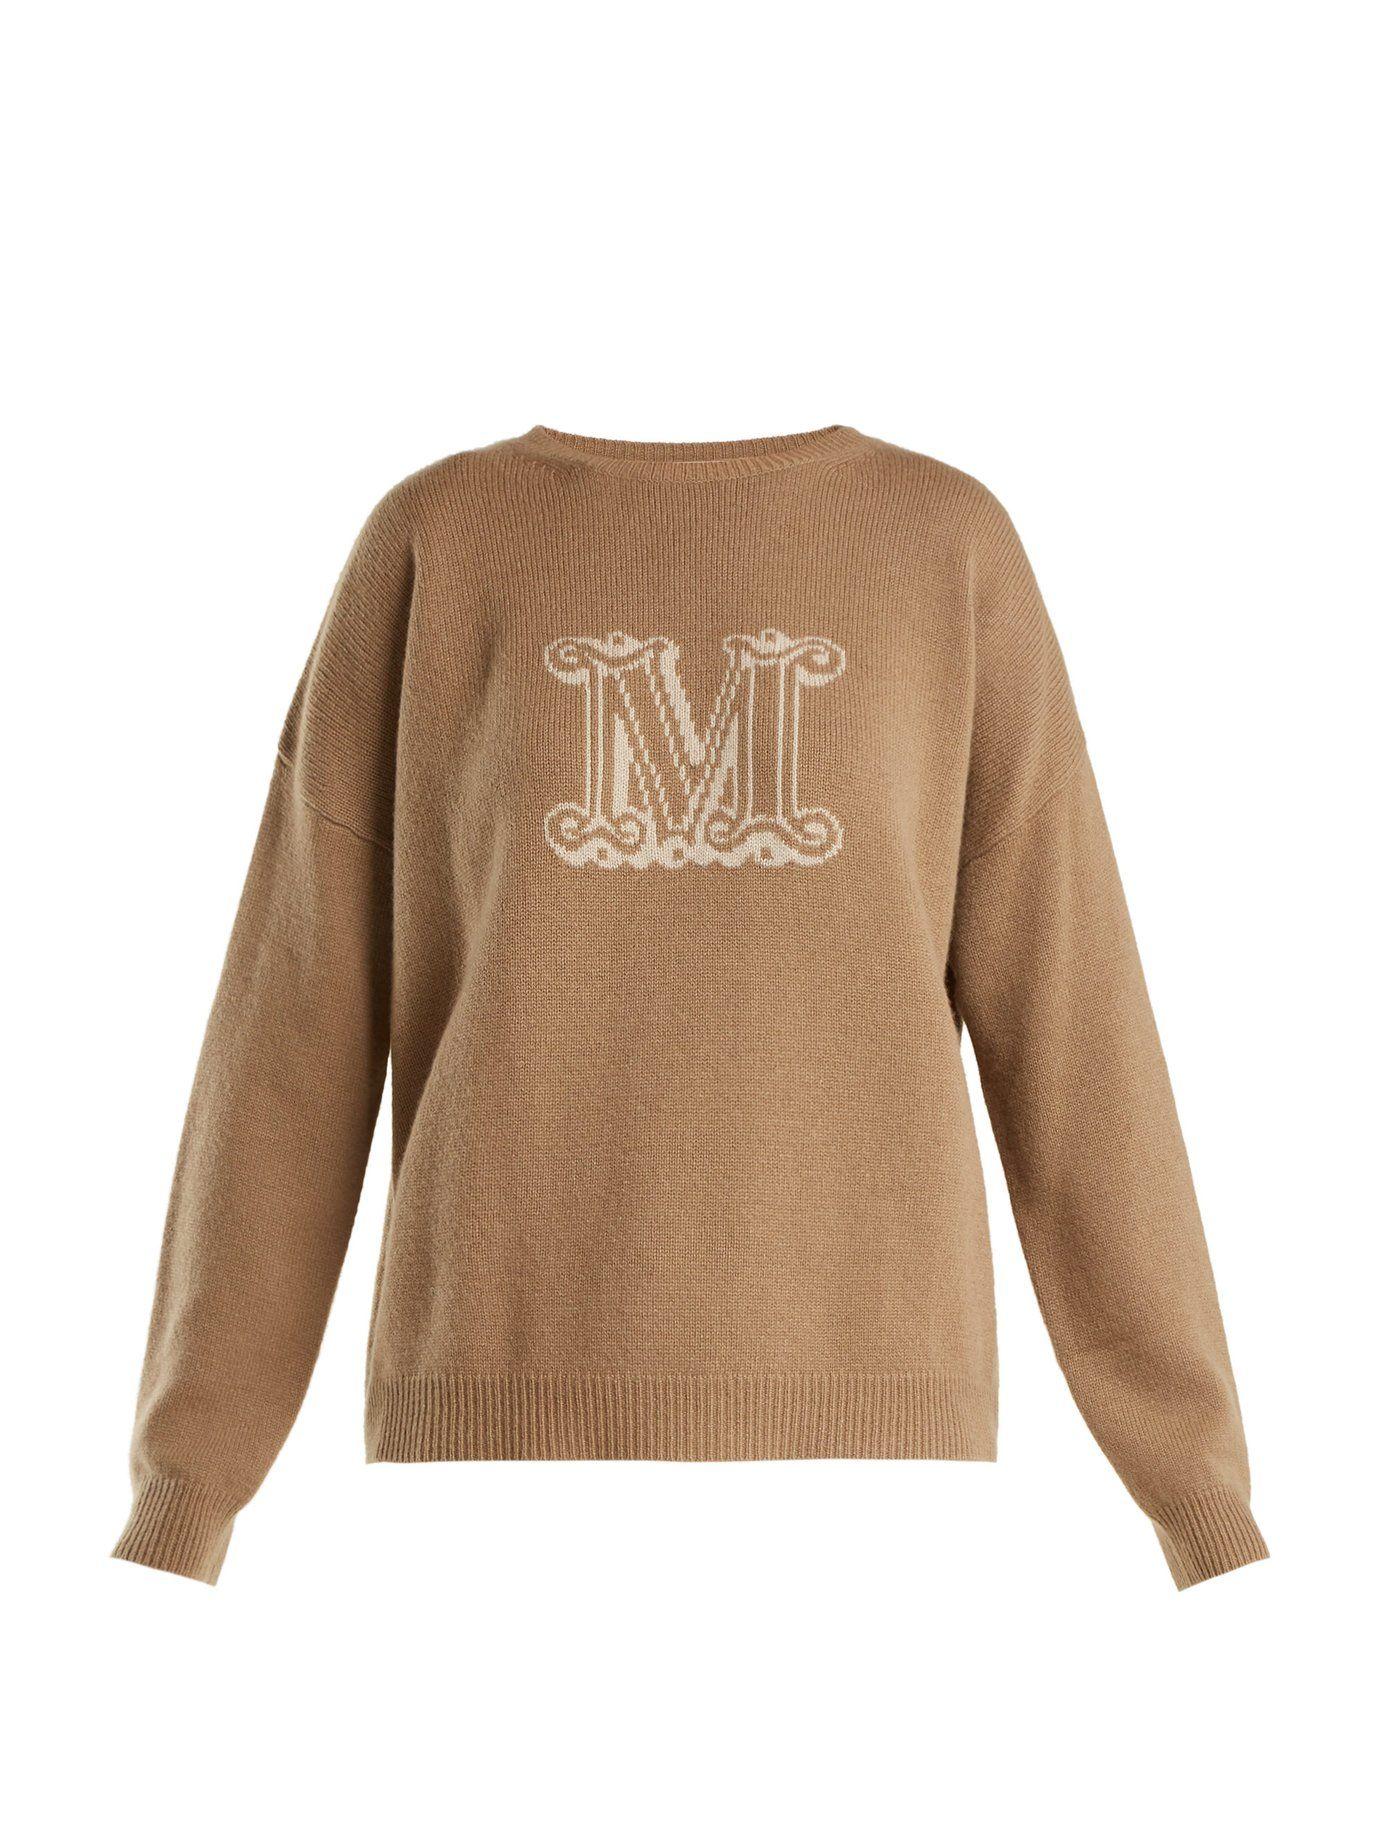 Max Mara Logo - Max Mara Logo Intarsia Cashmere Knit Sweater In Neutrals